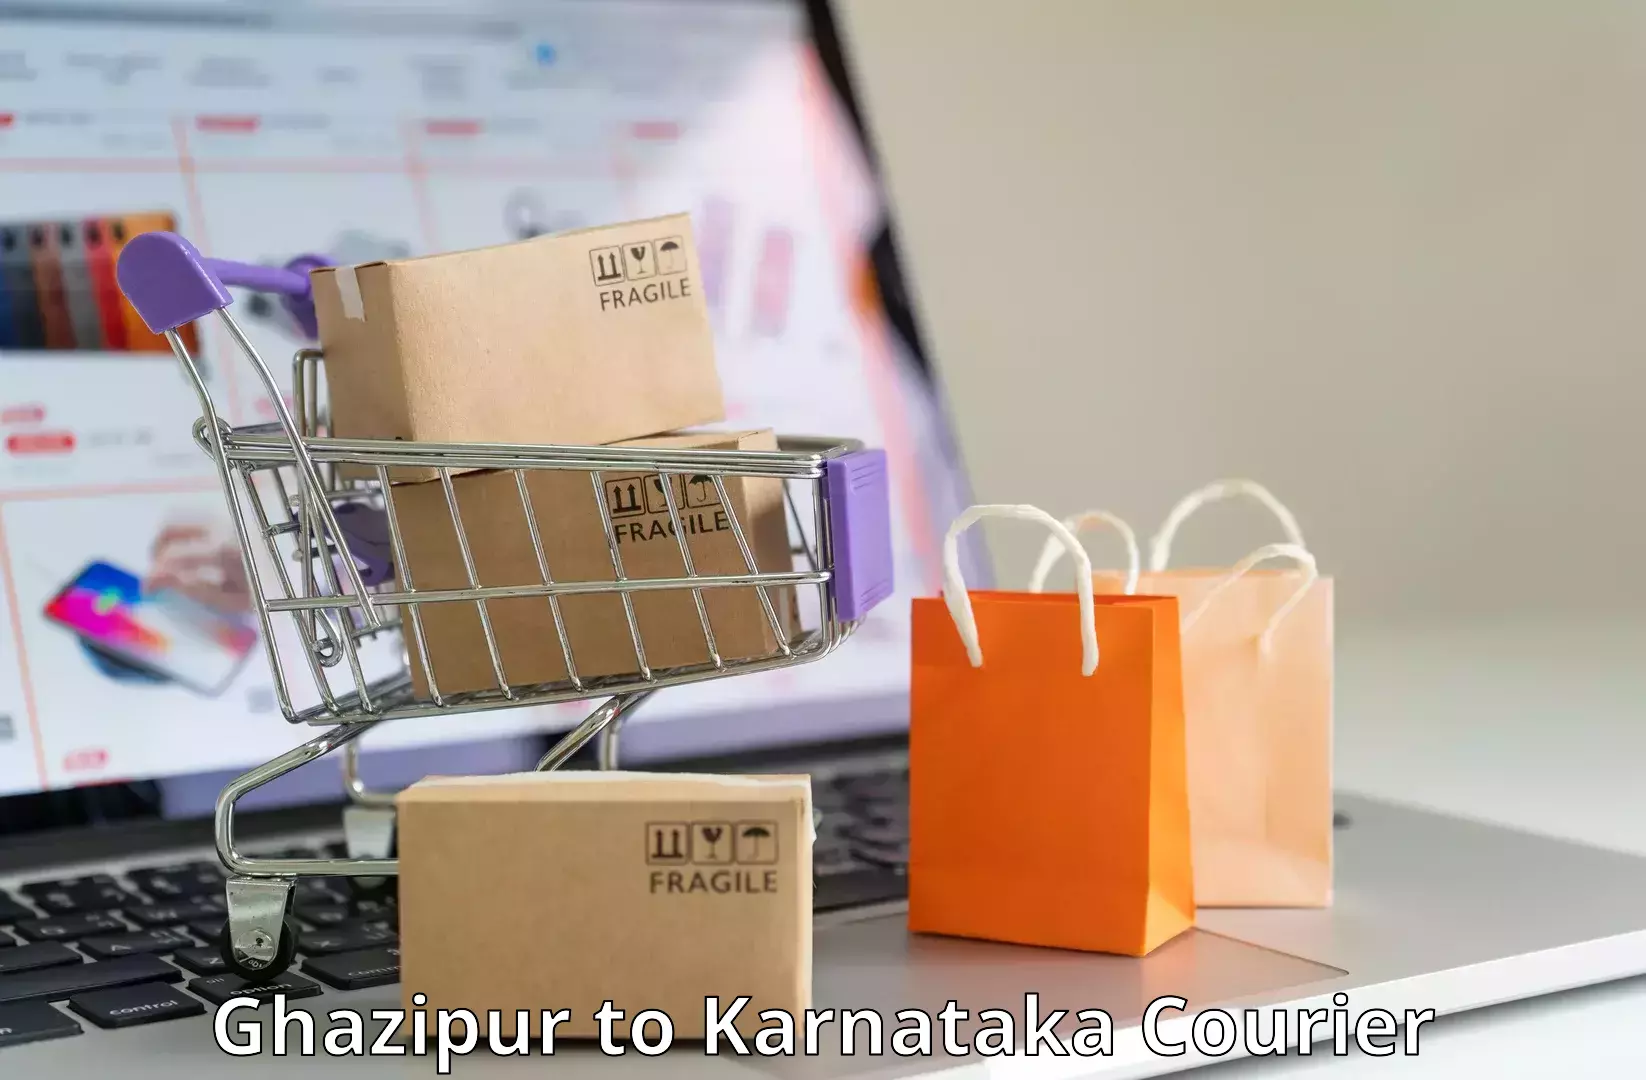 Smart shipping technology Ghazipur to Karnataka